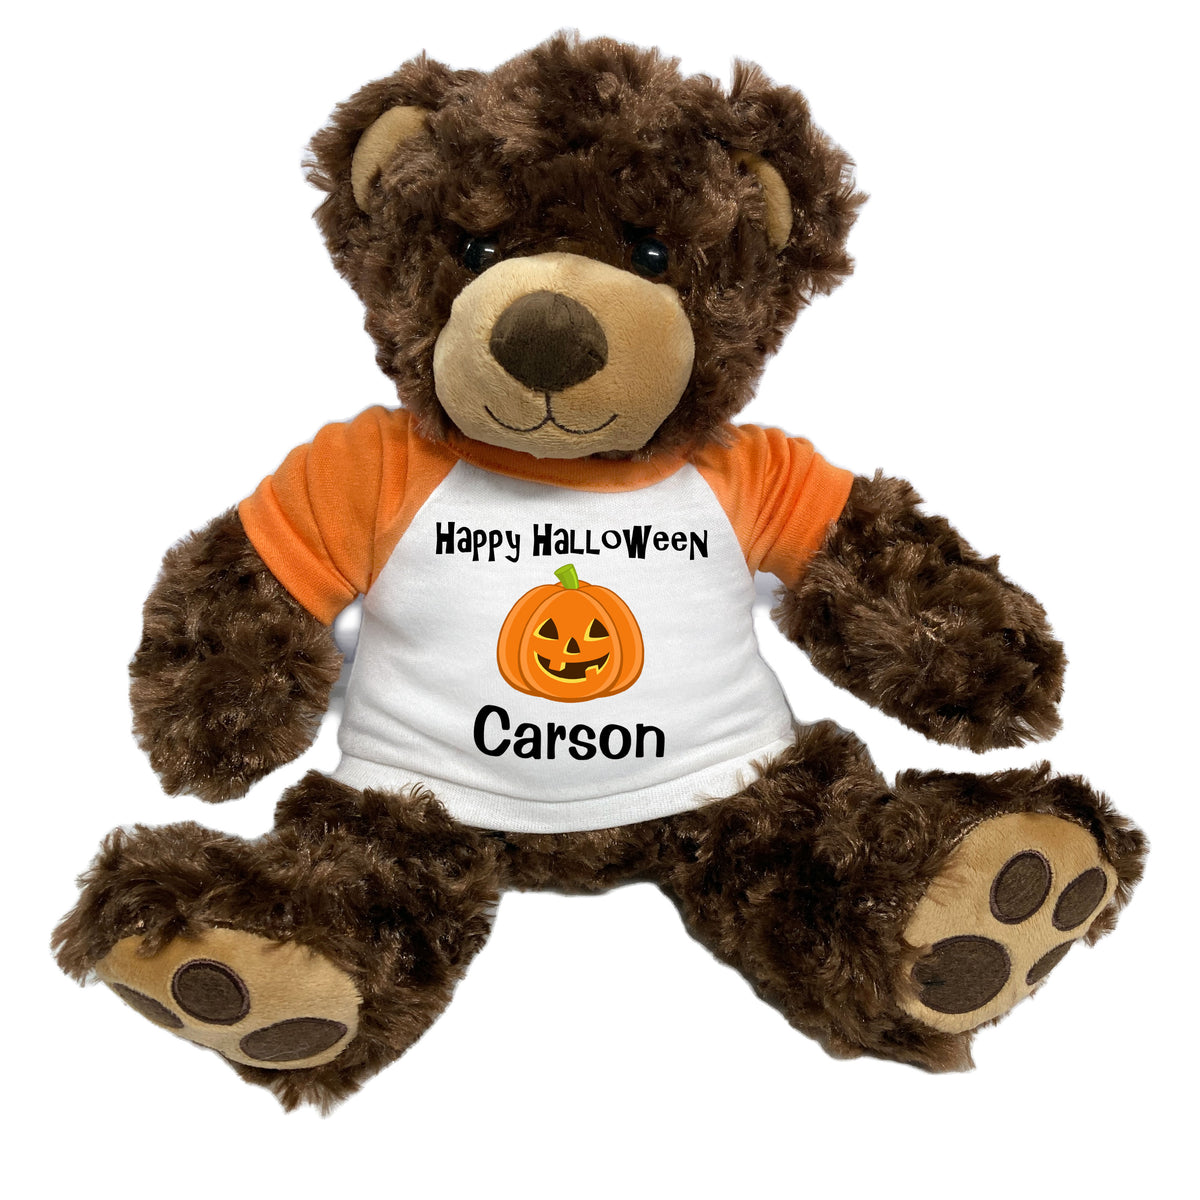 Personalized Halloween Teddy Bear - 13" Brown Vera Bear